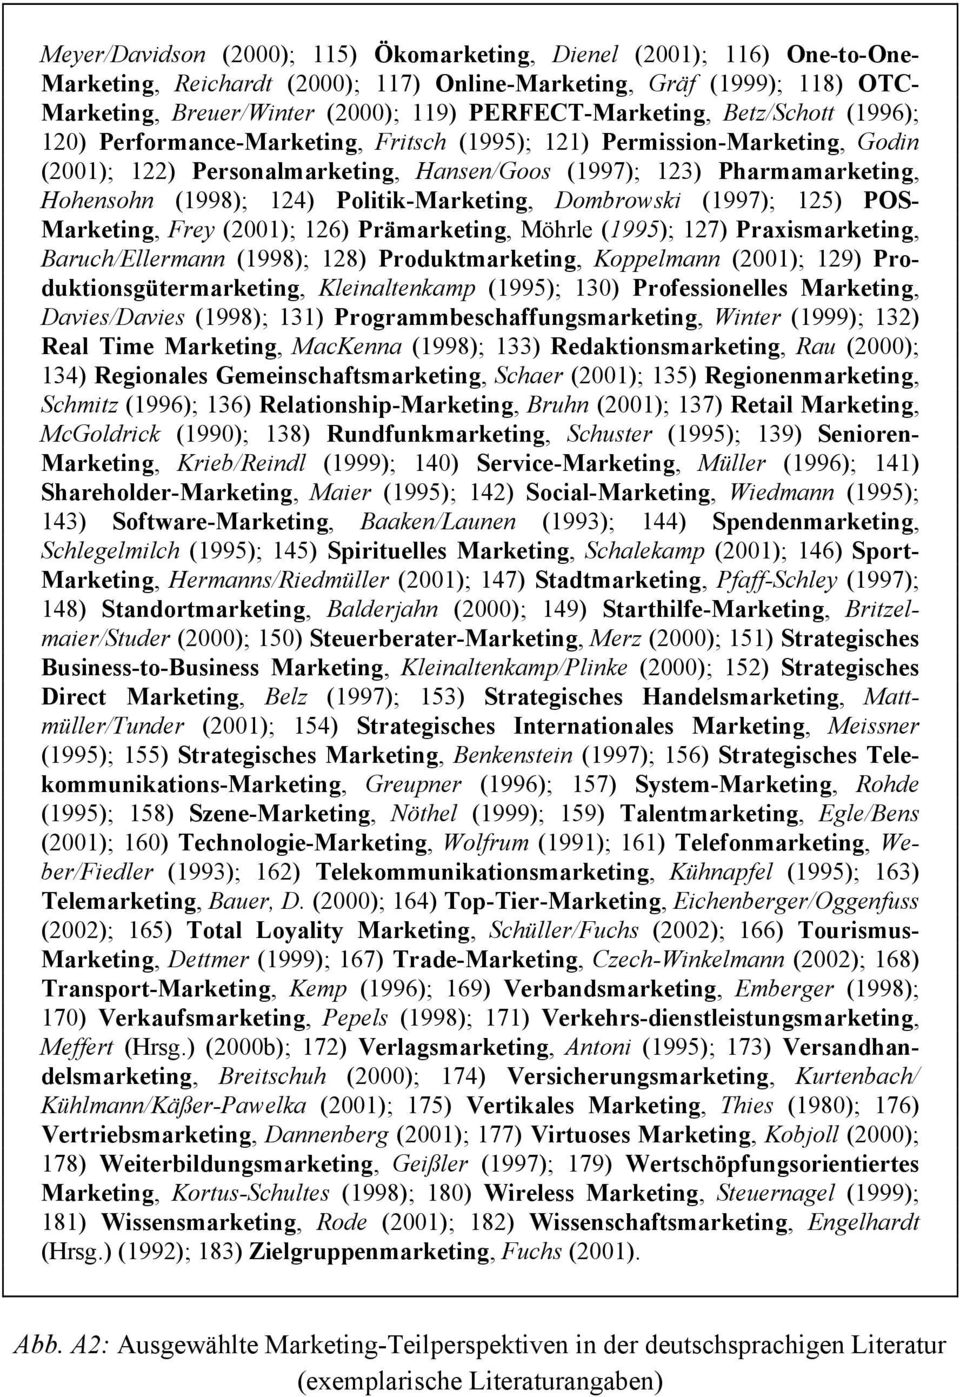 (1998); 124) Politik-Marketing, Dombrowski (1997); 125) P- Marketing, Frey (2001); 126) Prämarketing, Möhrle (1995); 127) Praxismarketing, Baruch/Ellermann (1998); 128) Produktmarketing, Koppelmann